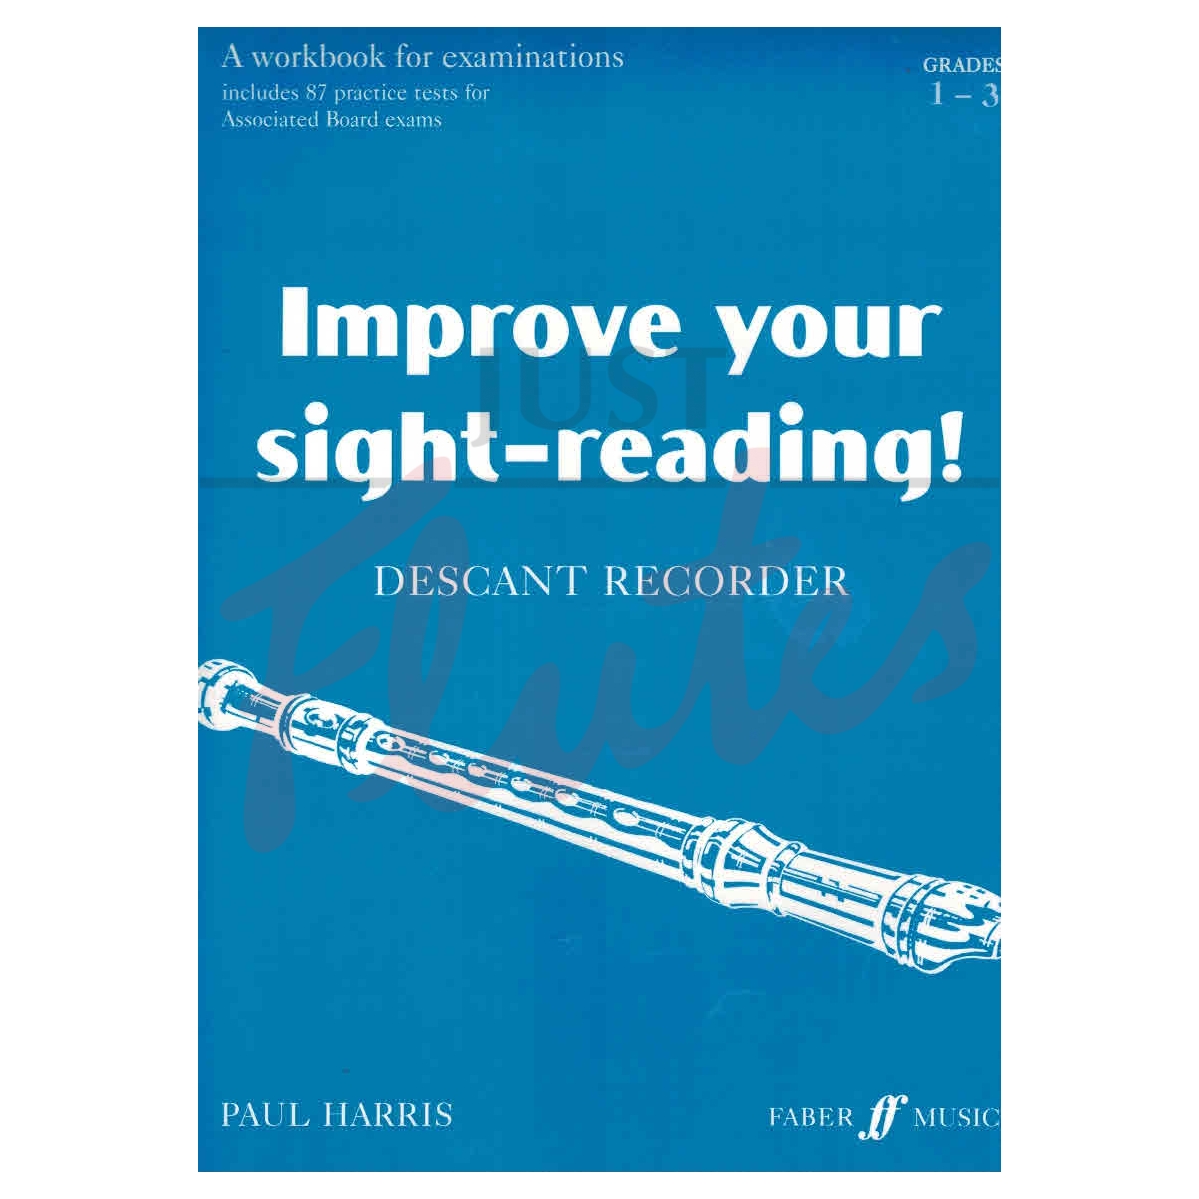 Improve Your Sight-Reading! [Descant Recorder] Grades 1-3